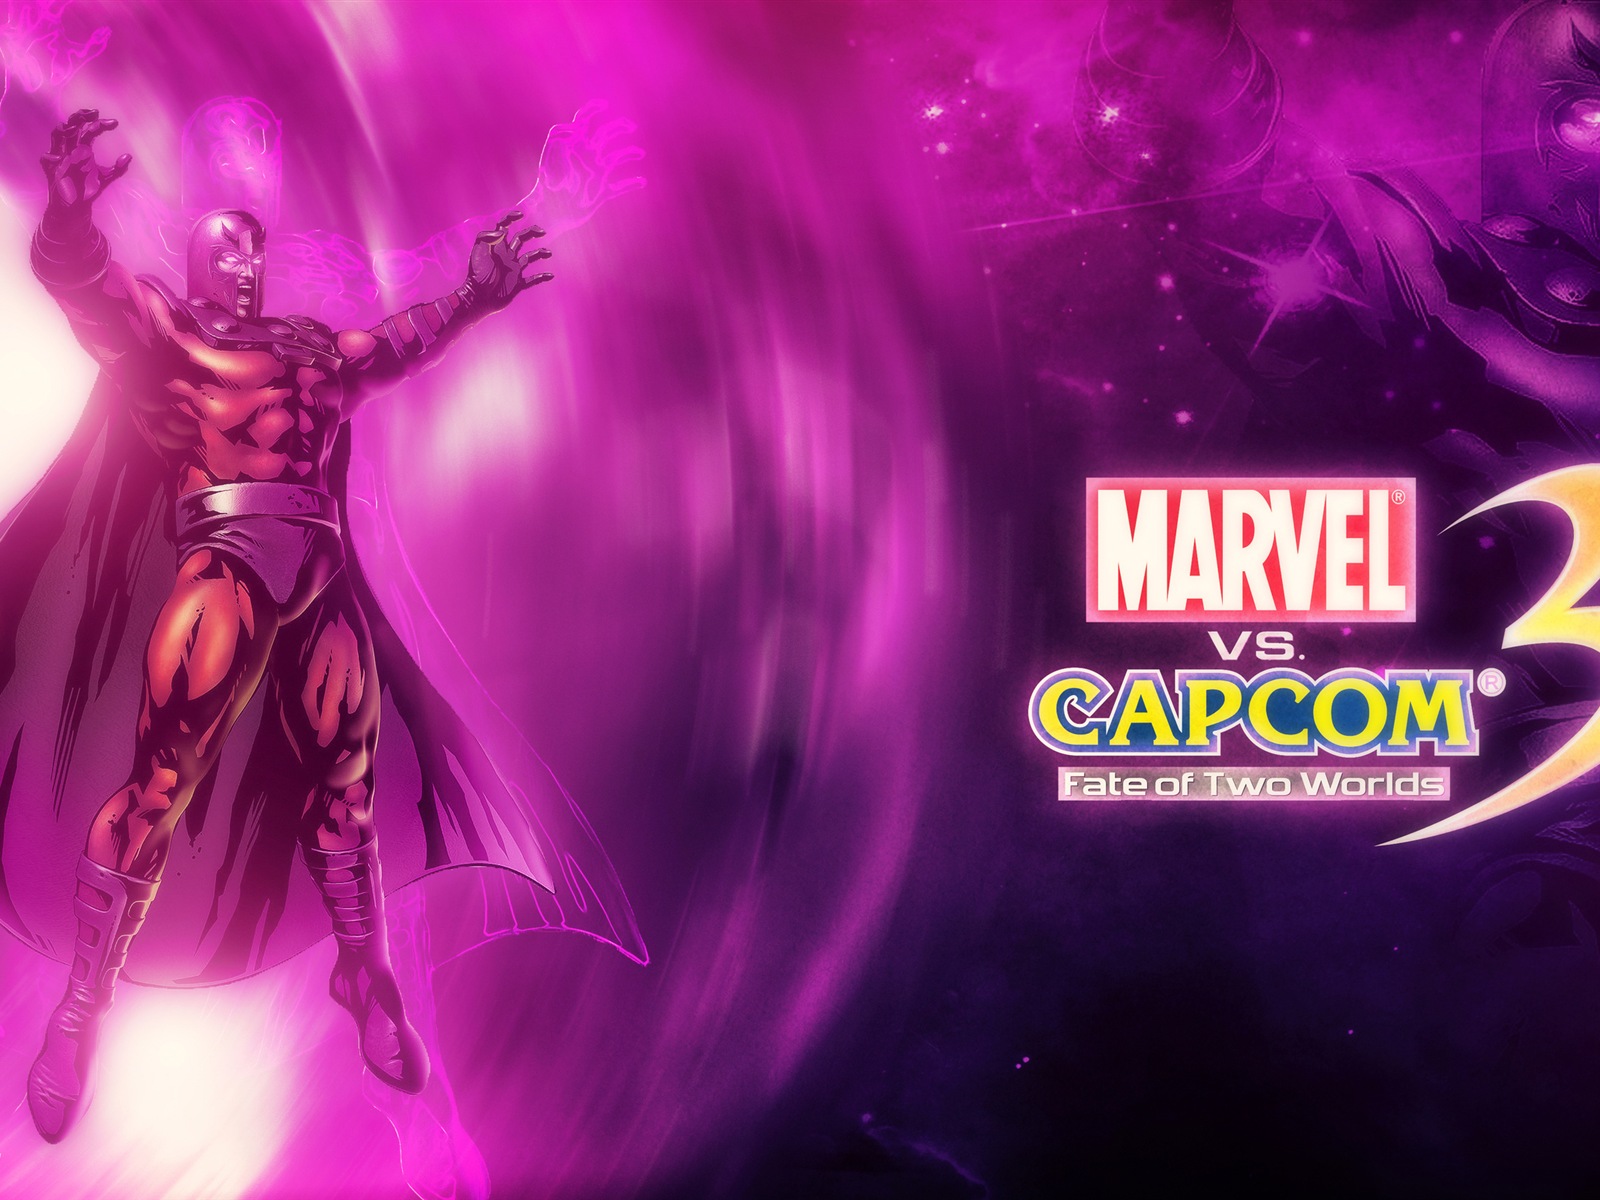 Marvel VS. Capcom 3: Fate of Two Worlds 漫画英雄VS.卡普空3 高清游戏壁纸7 - 1600x1200